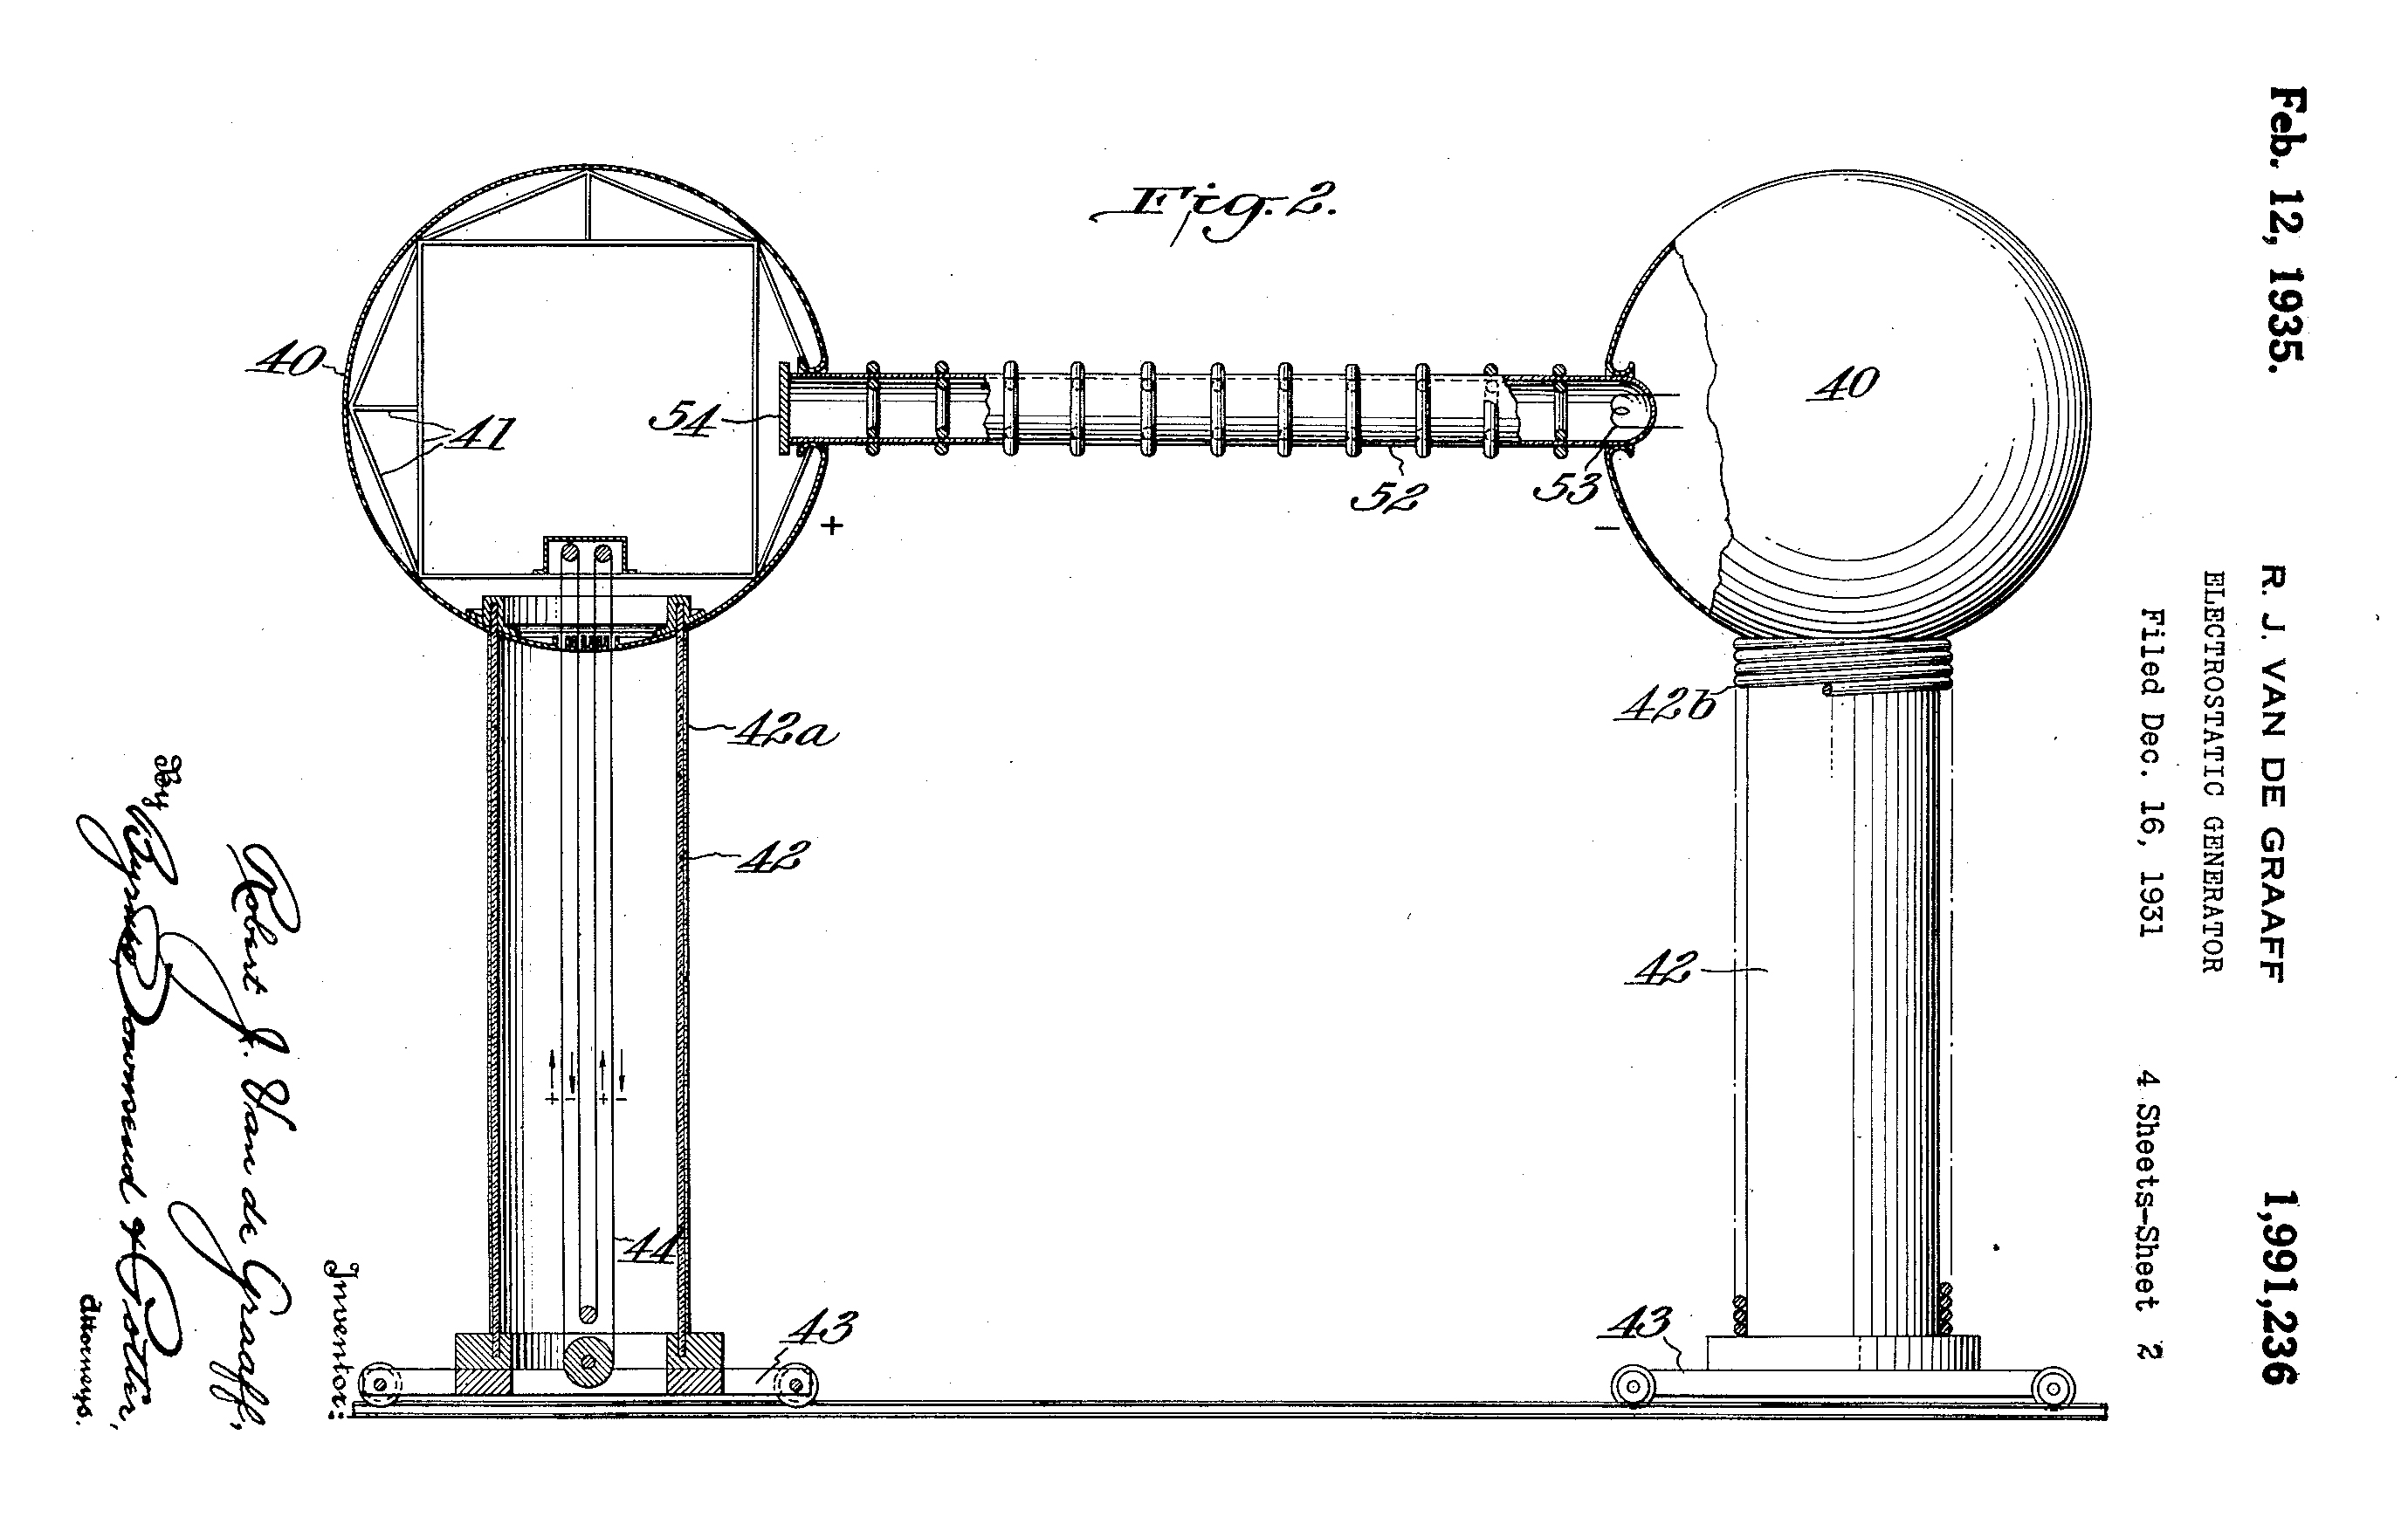 Van De Graff electrostatic generator patent US581499A from 1931